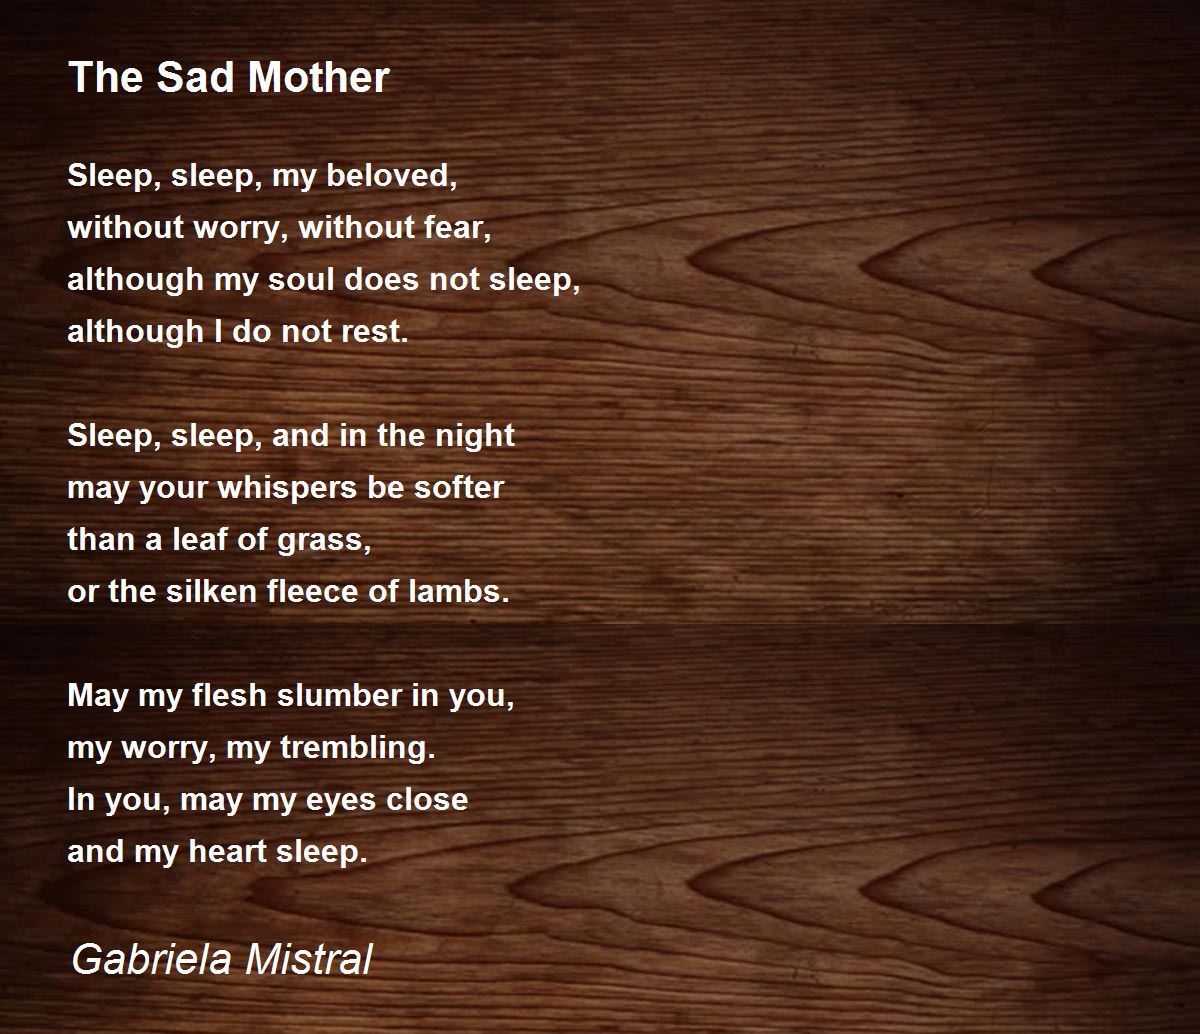 The Sad Mother - The Sad Mother Poem by Gabriela Mistral